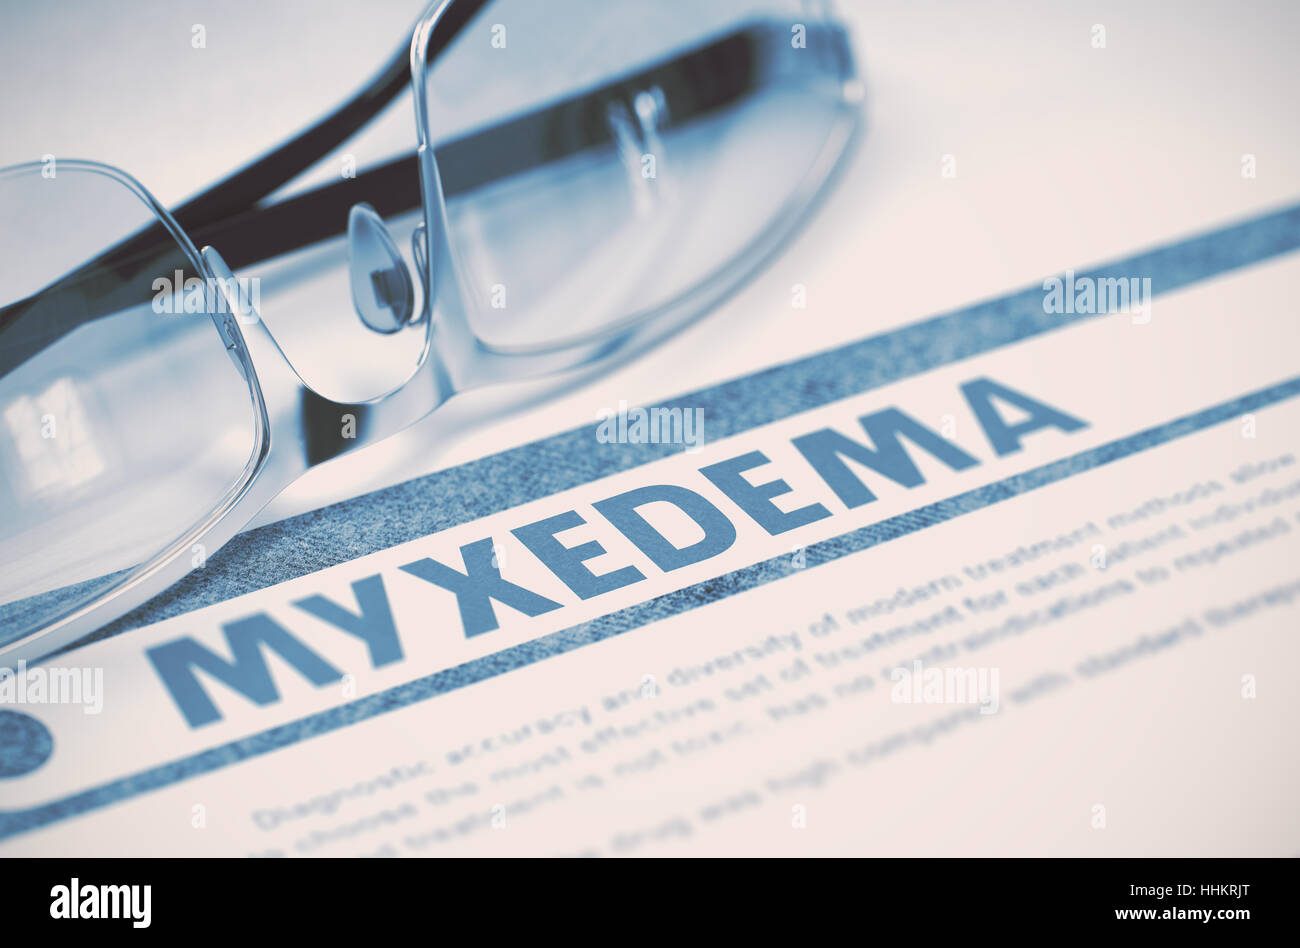 Diagnosis - Myxedema. Medicine Concept. 3D Illustration. Stock Photo